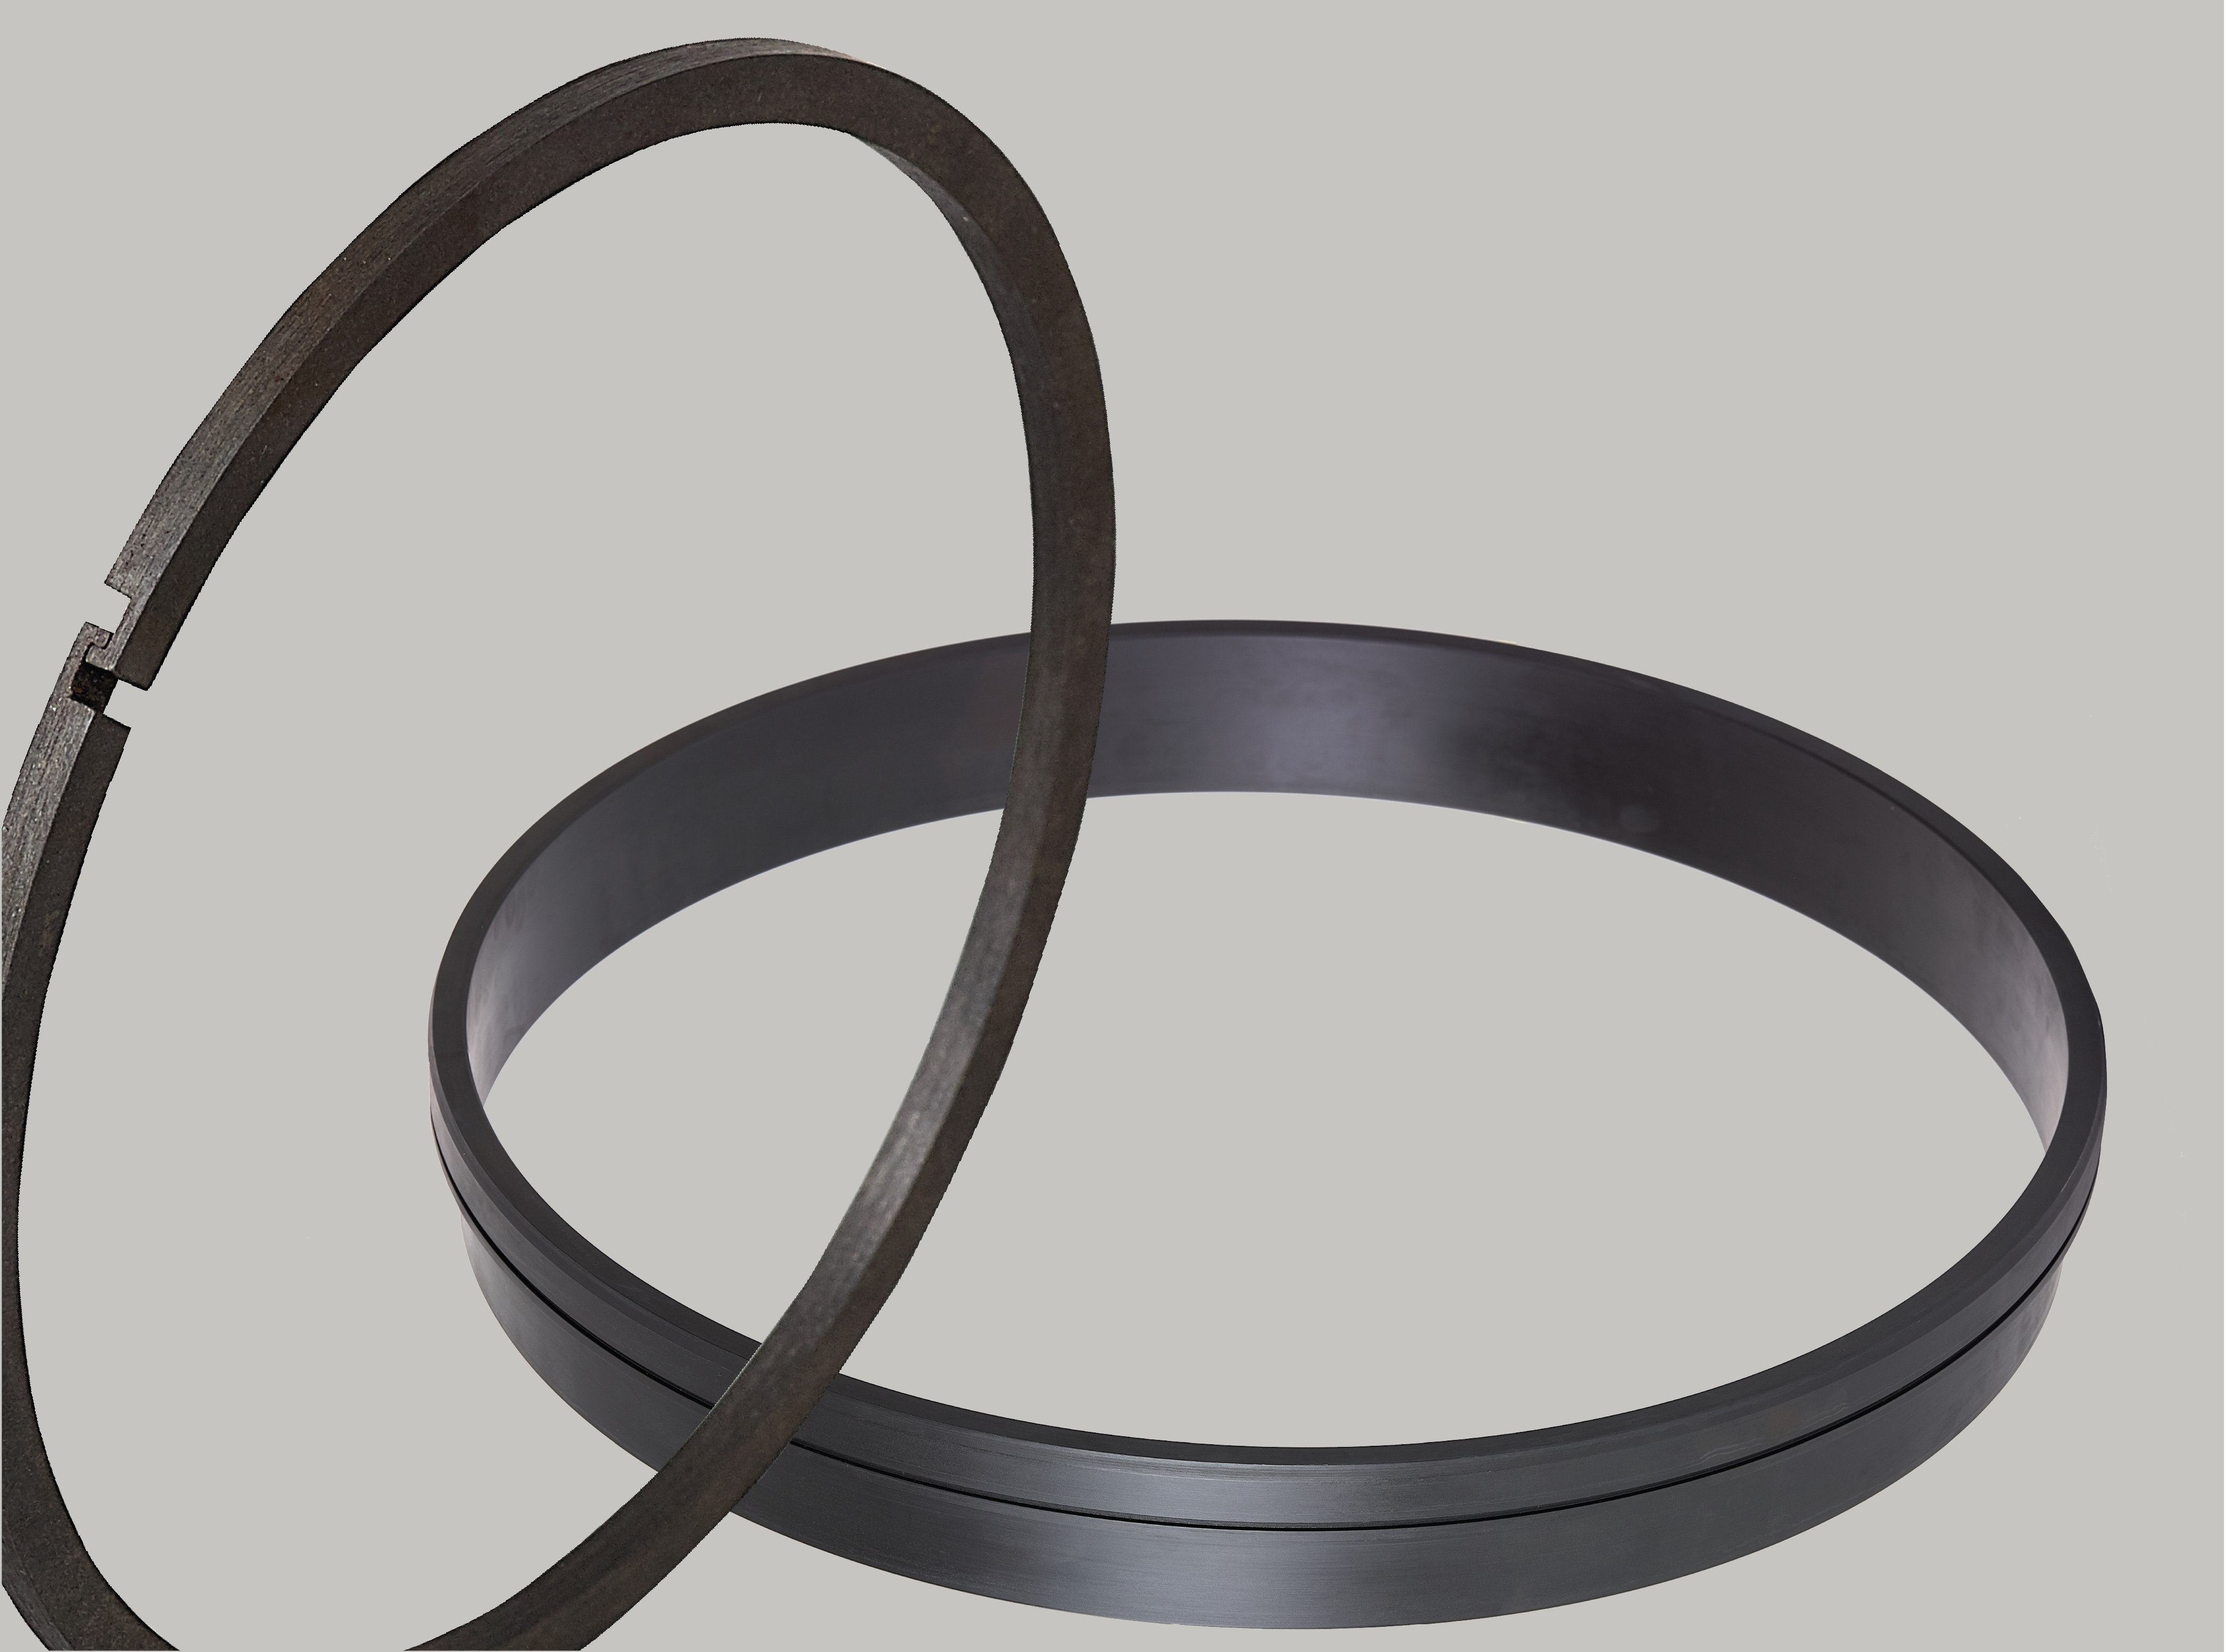 O-ring 2 Large O-rings 2 Medium O-rings 2 Small O-rings ANY Black O RINGS  POOL | eBay